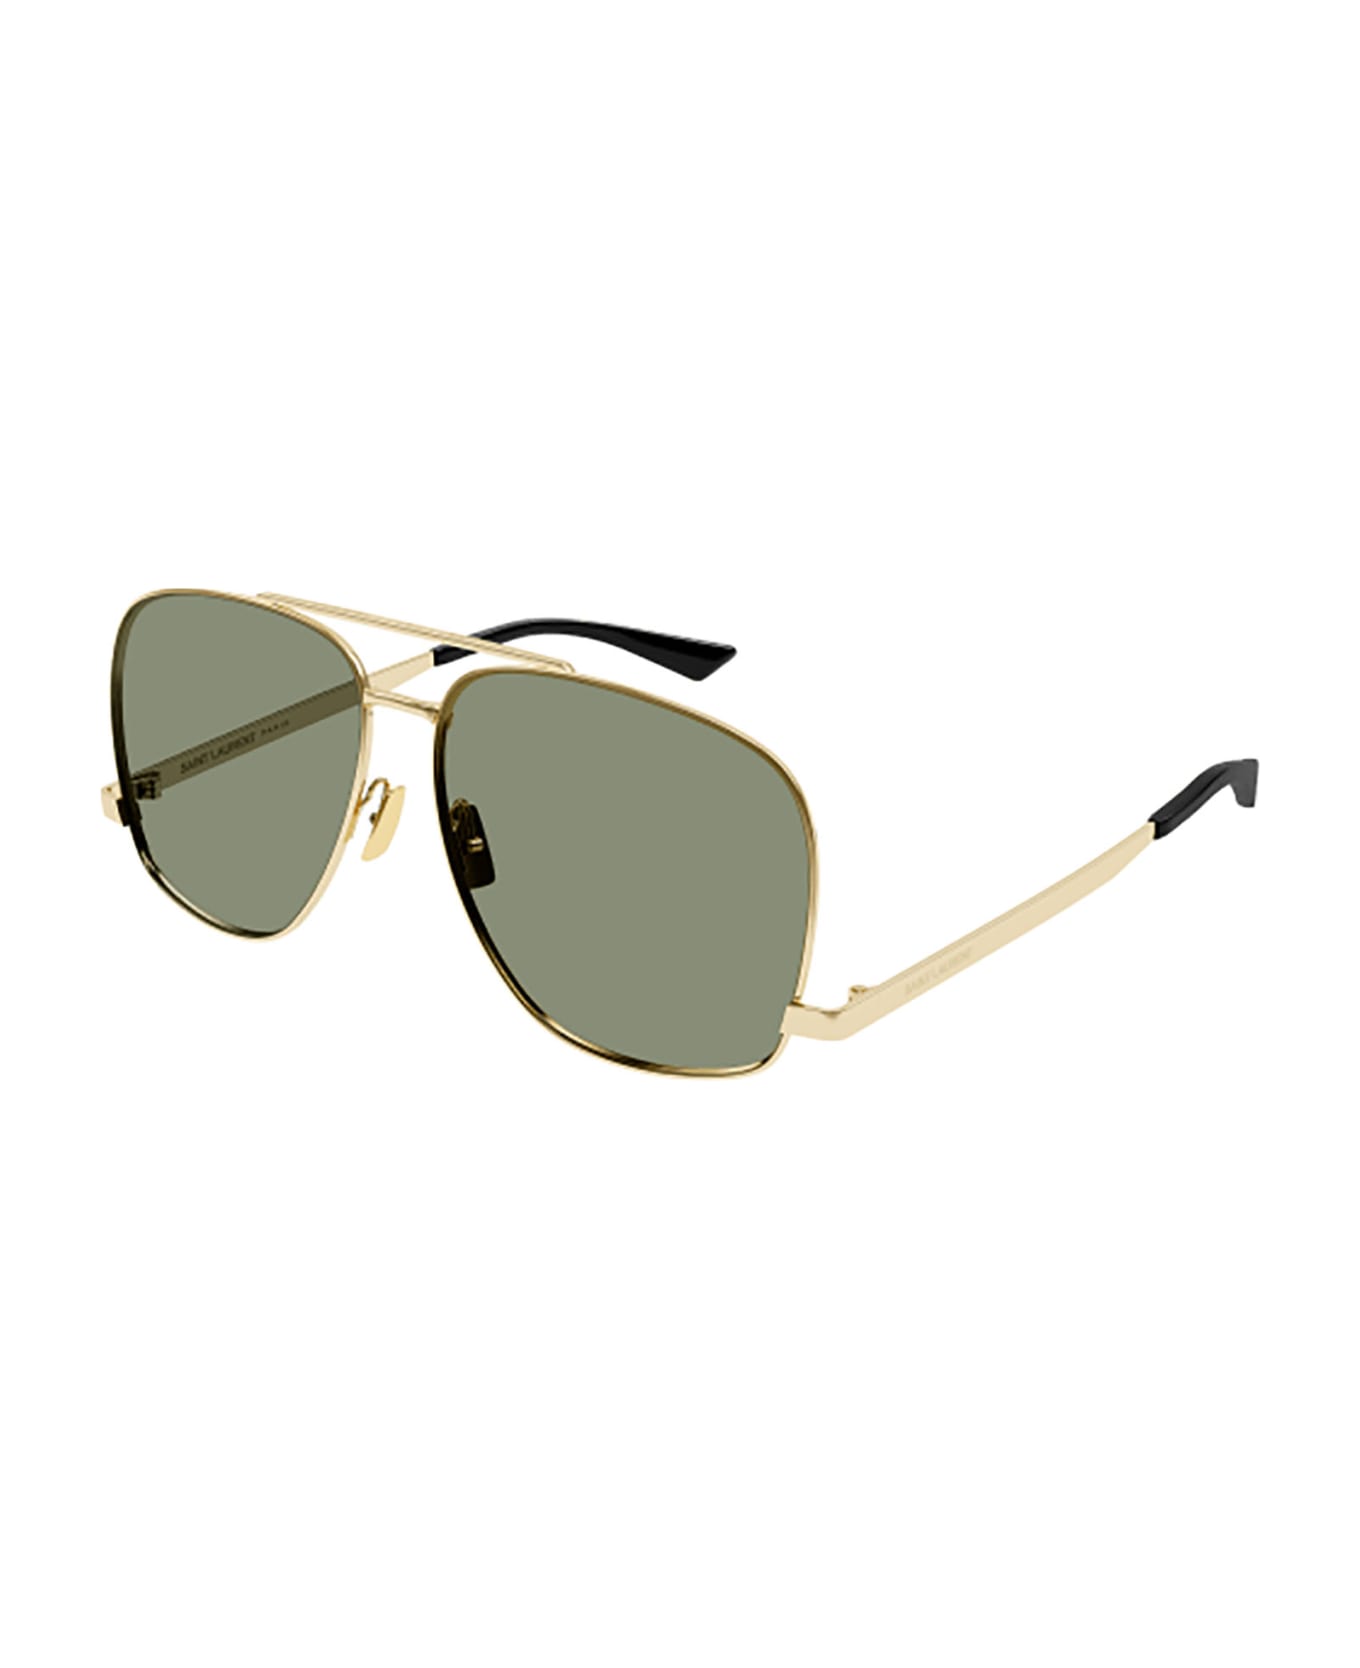 Saint Laurent Eyewear SL 653 LEON Sunglasses gradient - Gold Gold Green